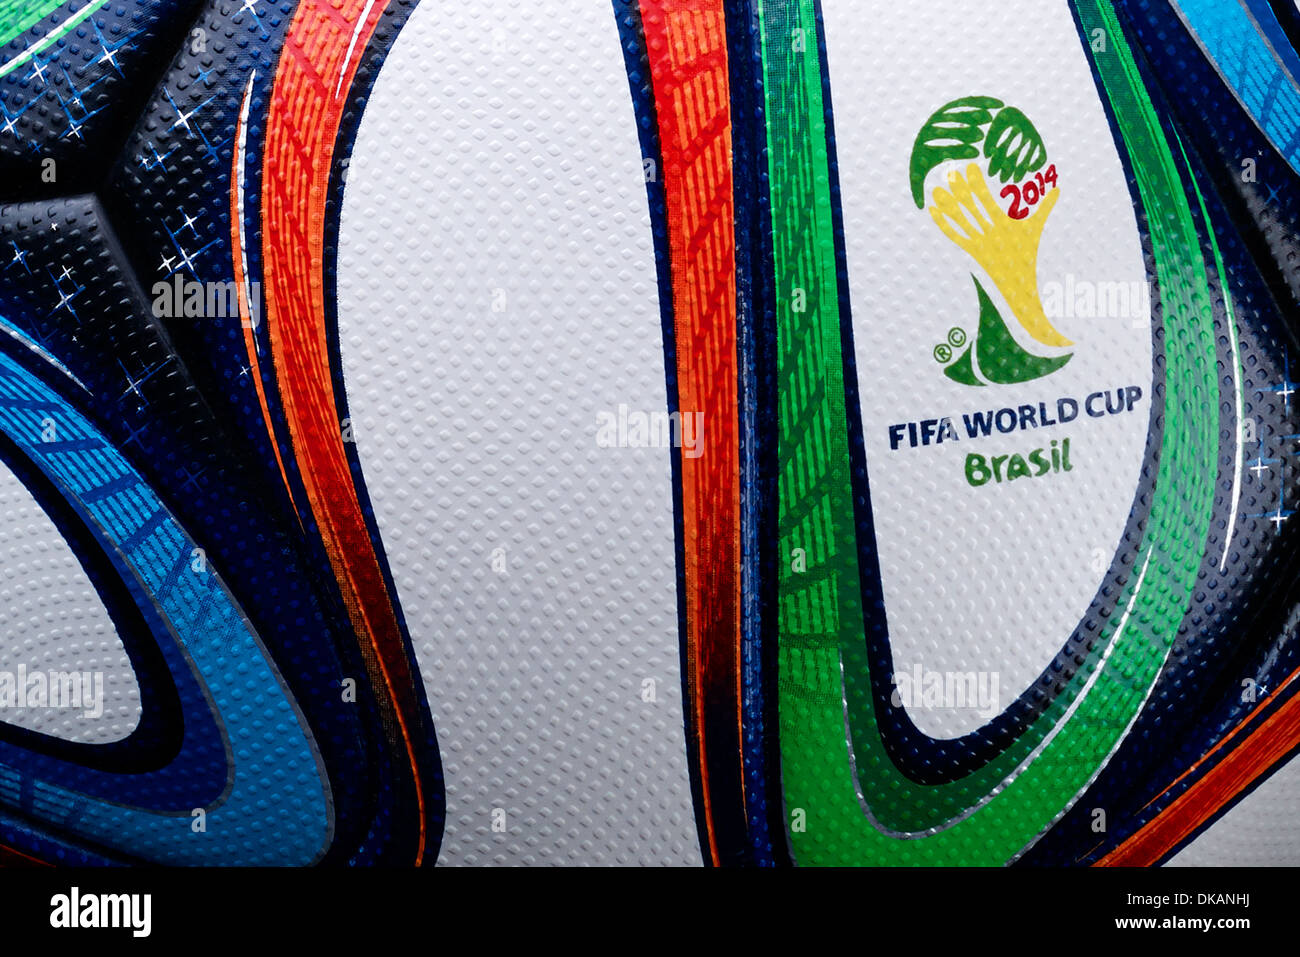 Adidas Brazuca, Offizieller Spielball der FIFA WM Brasilien 2014 Stockfoto